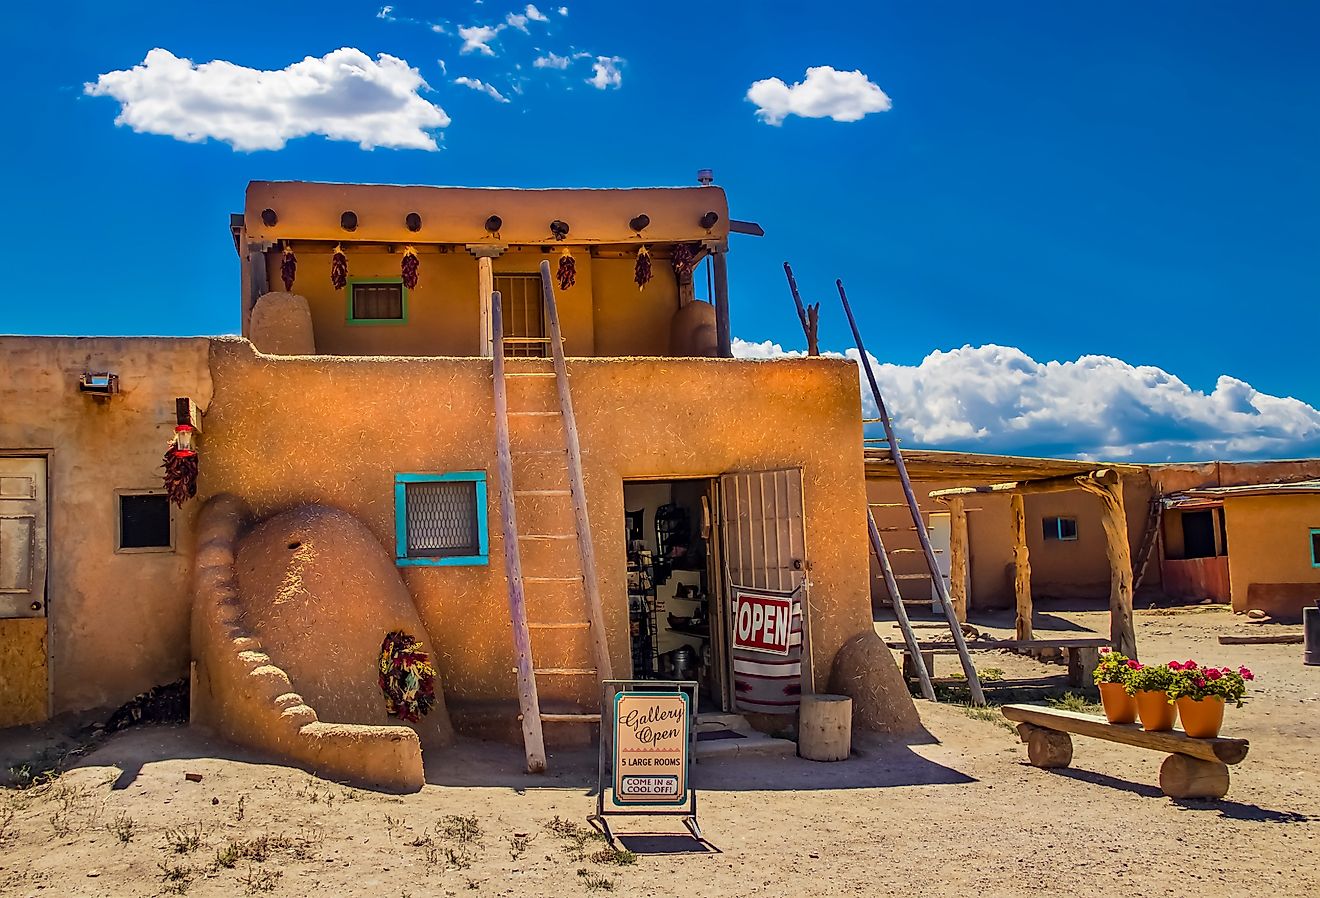 Gallery in Taos Pueblo in New Mexico. Image credit Vineyard Perspective via Shutterstock